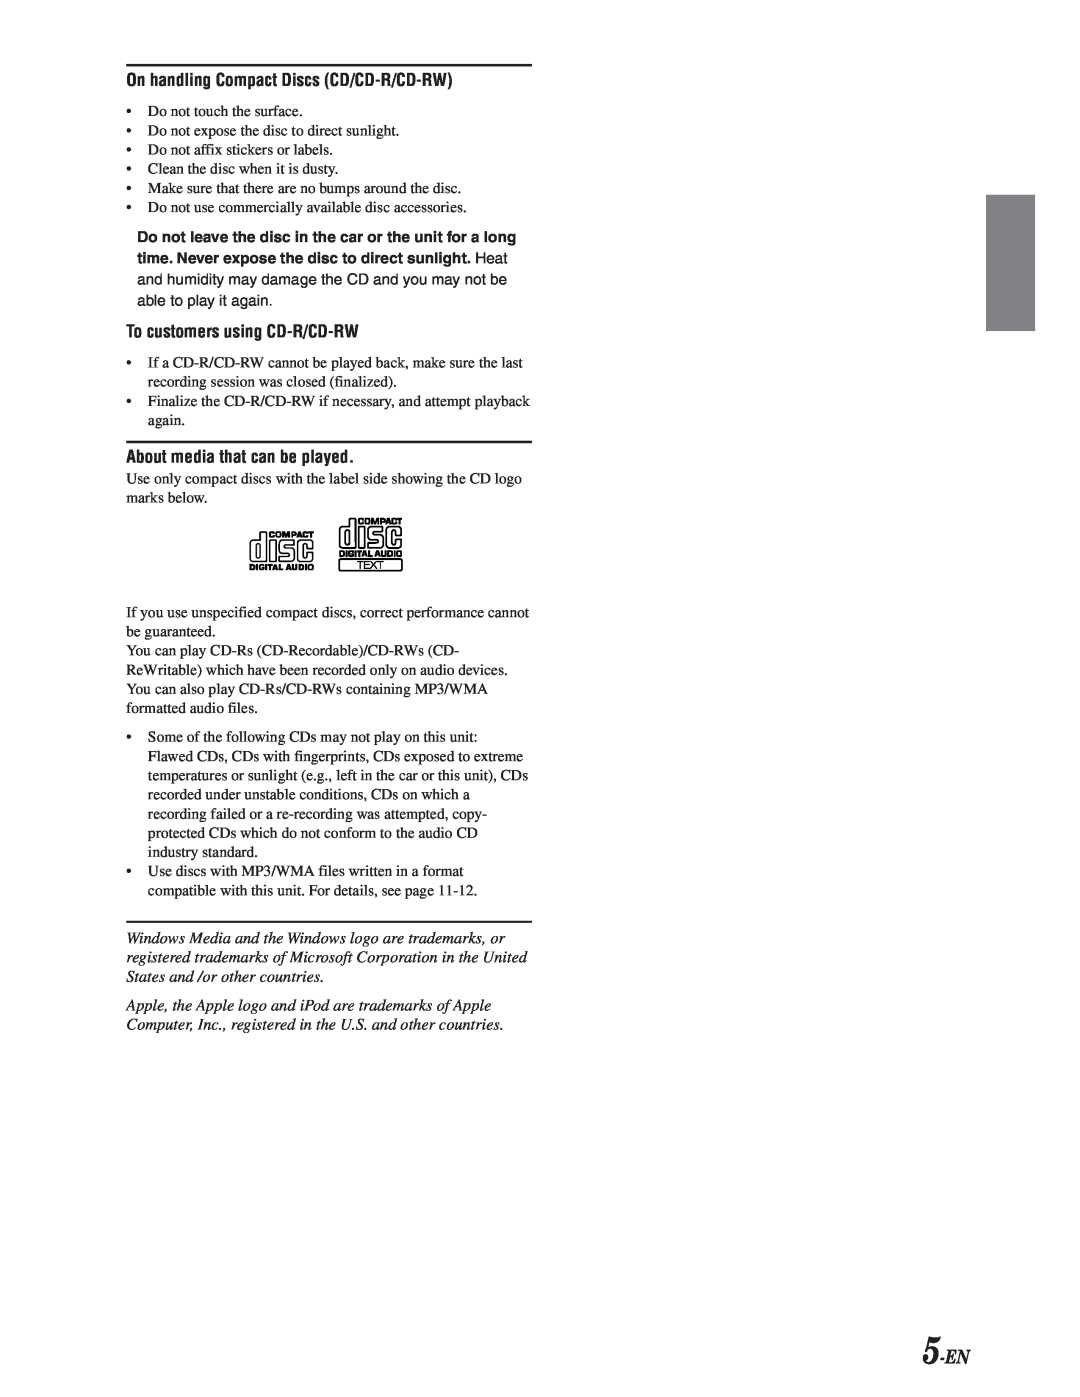 Alpine CDA-9847 owner manual 5-EN, On handling Compact Discs CD/CD-R/CD-RW, To customers using CD-R/CD-RW 